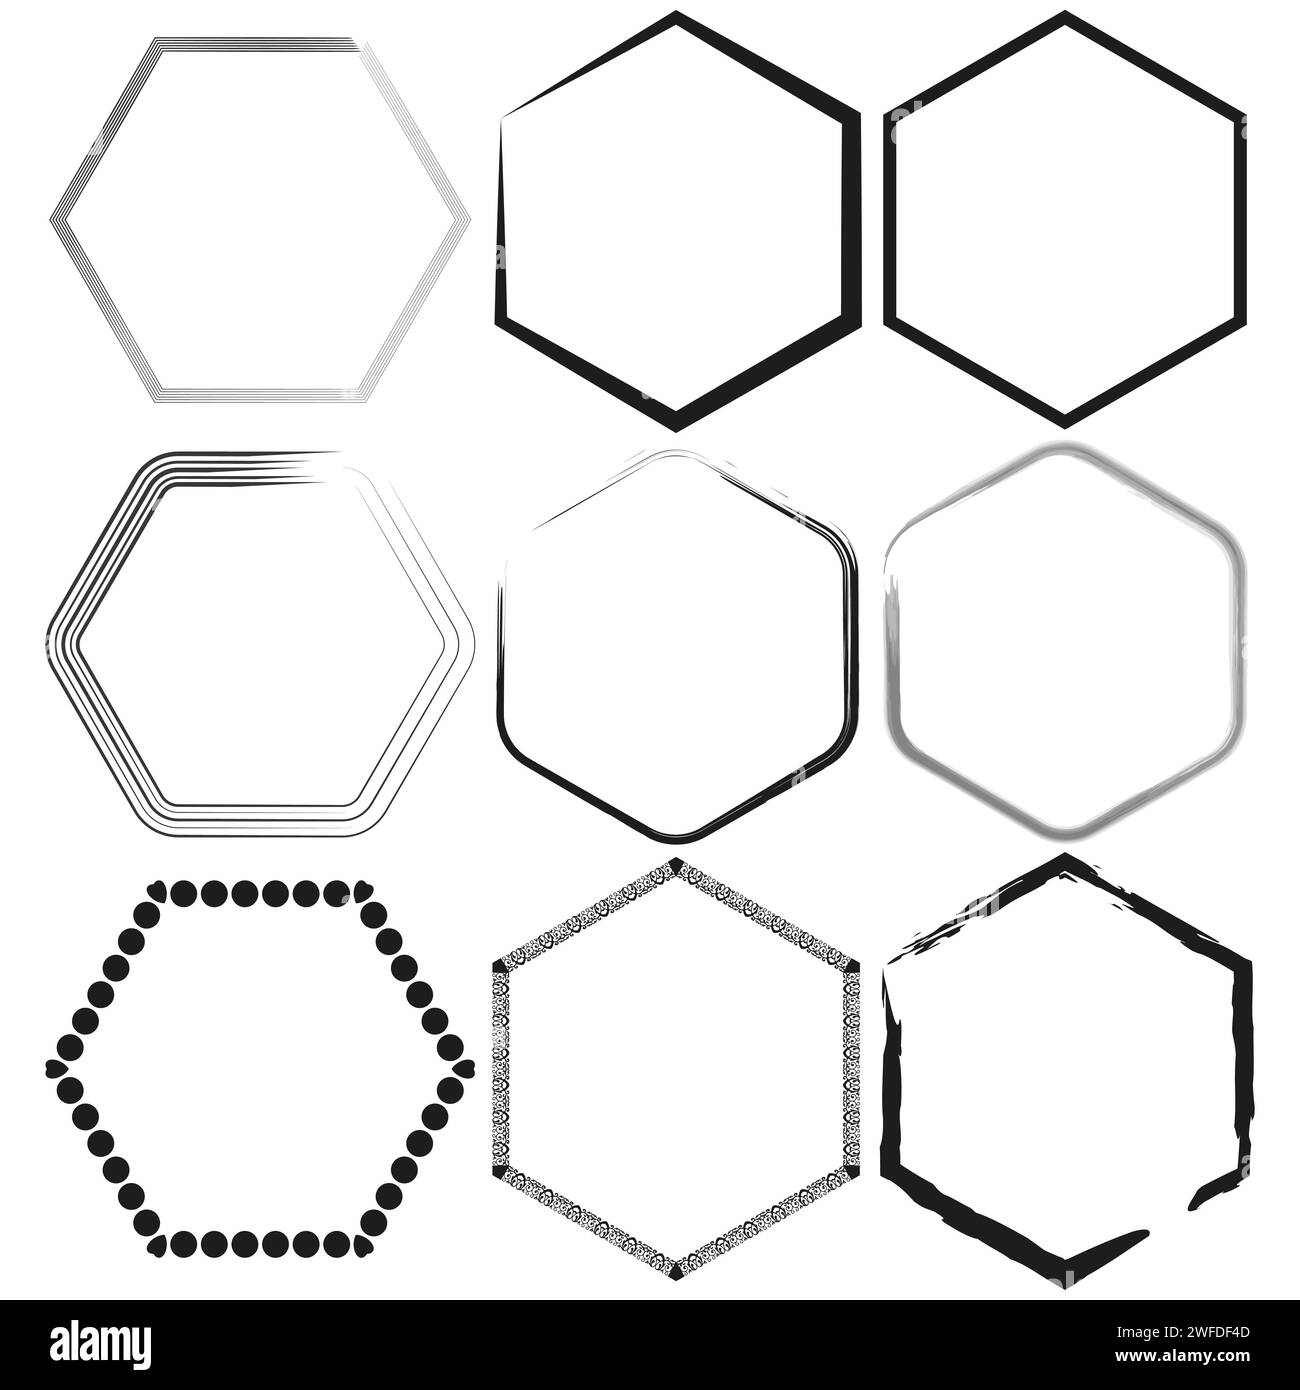 polygon octagon line. Vector illustration. EPS 10. Stock image. Stock Vector